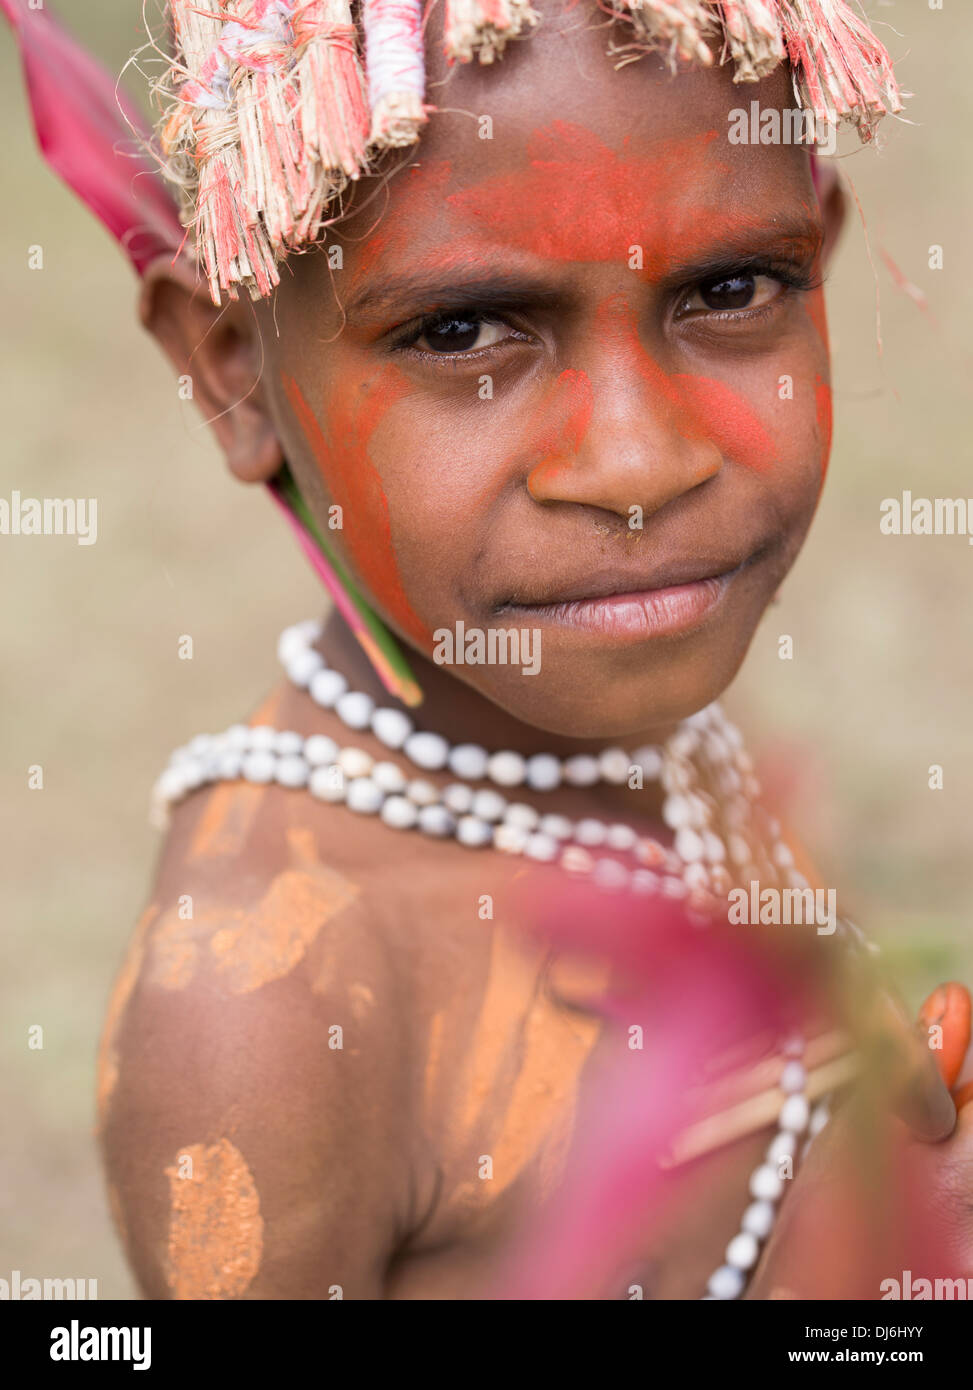 Kind aus der Noworya Singsing Group, Wonenara, Eastern Highlands Provinz - Goroka Show, Papua New Guinea Stockfoto